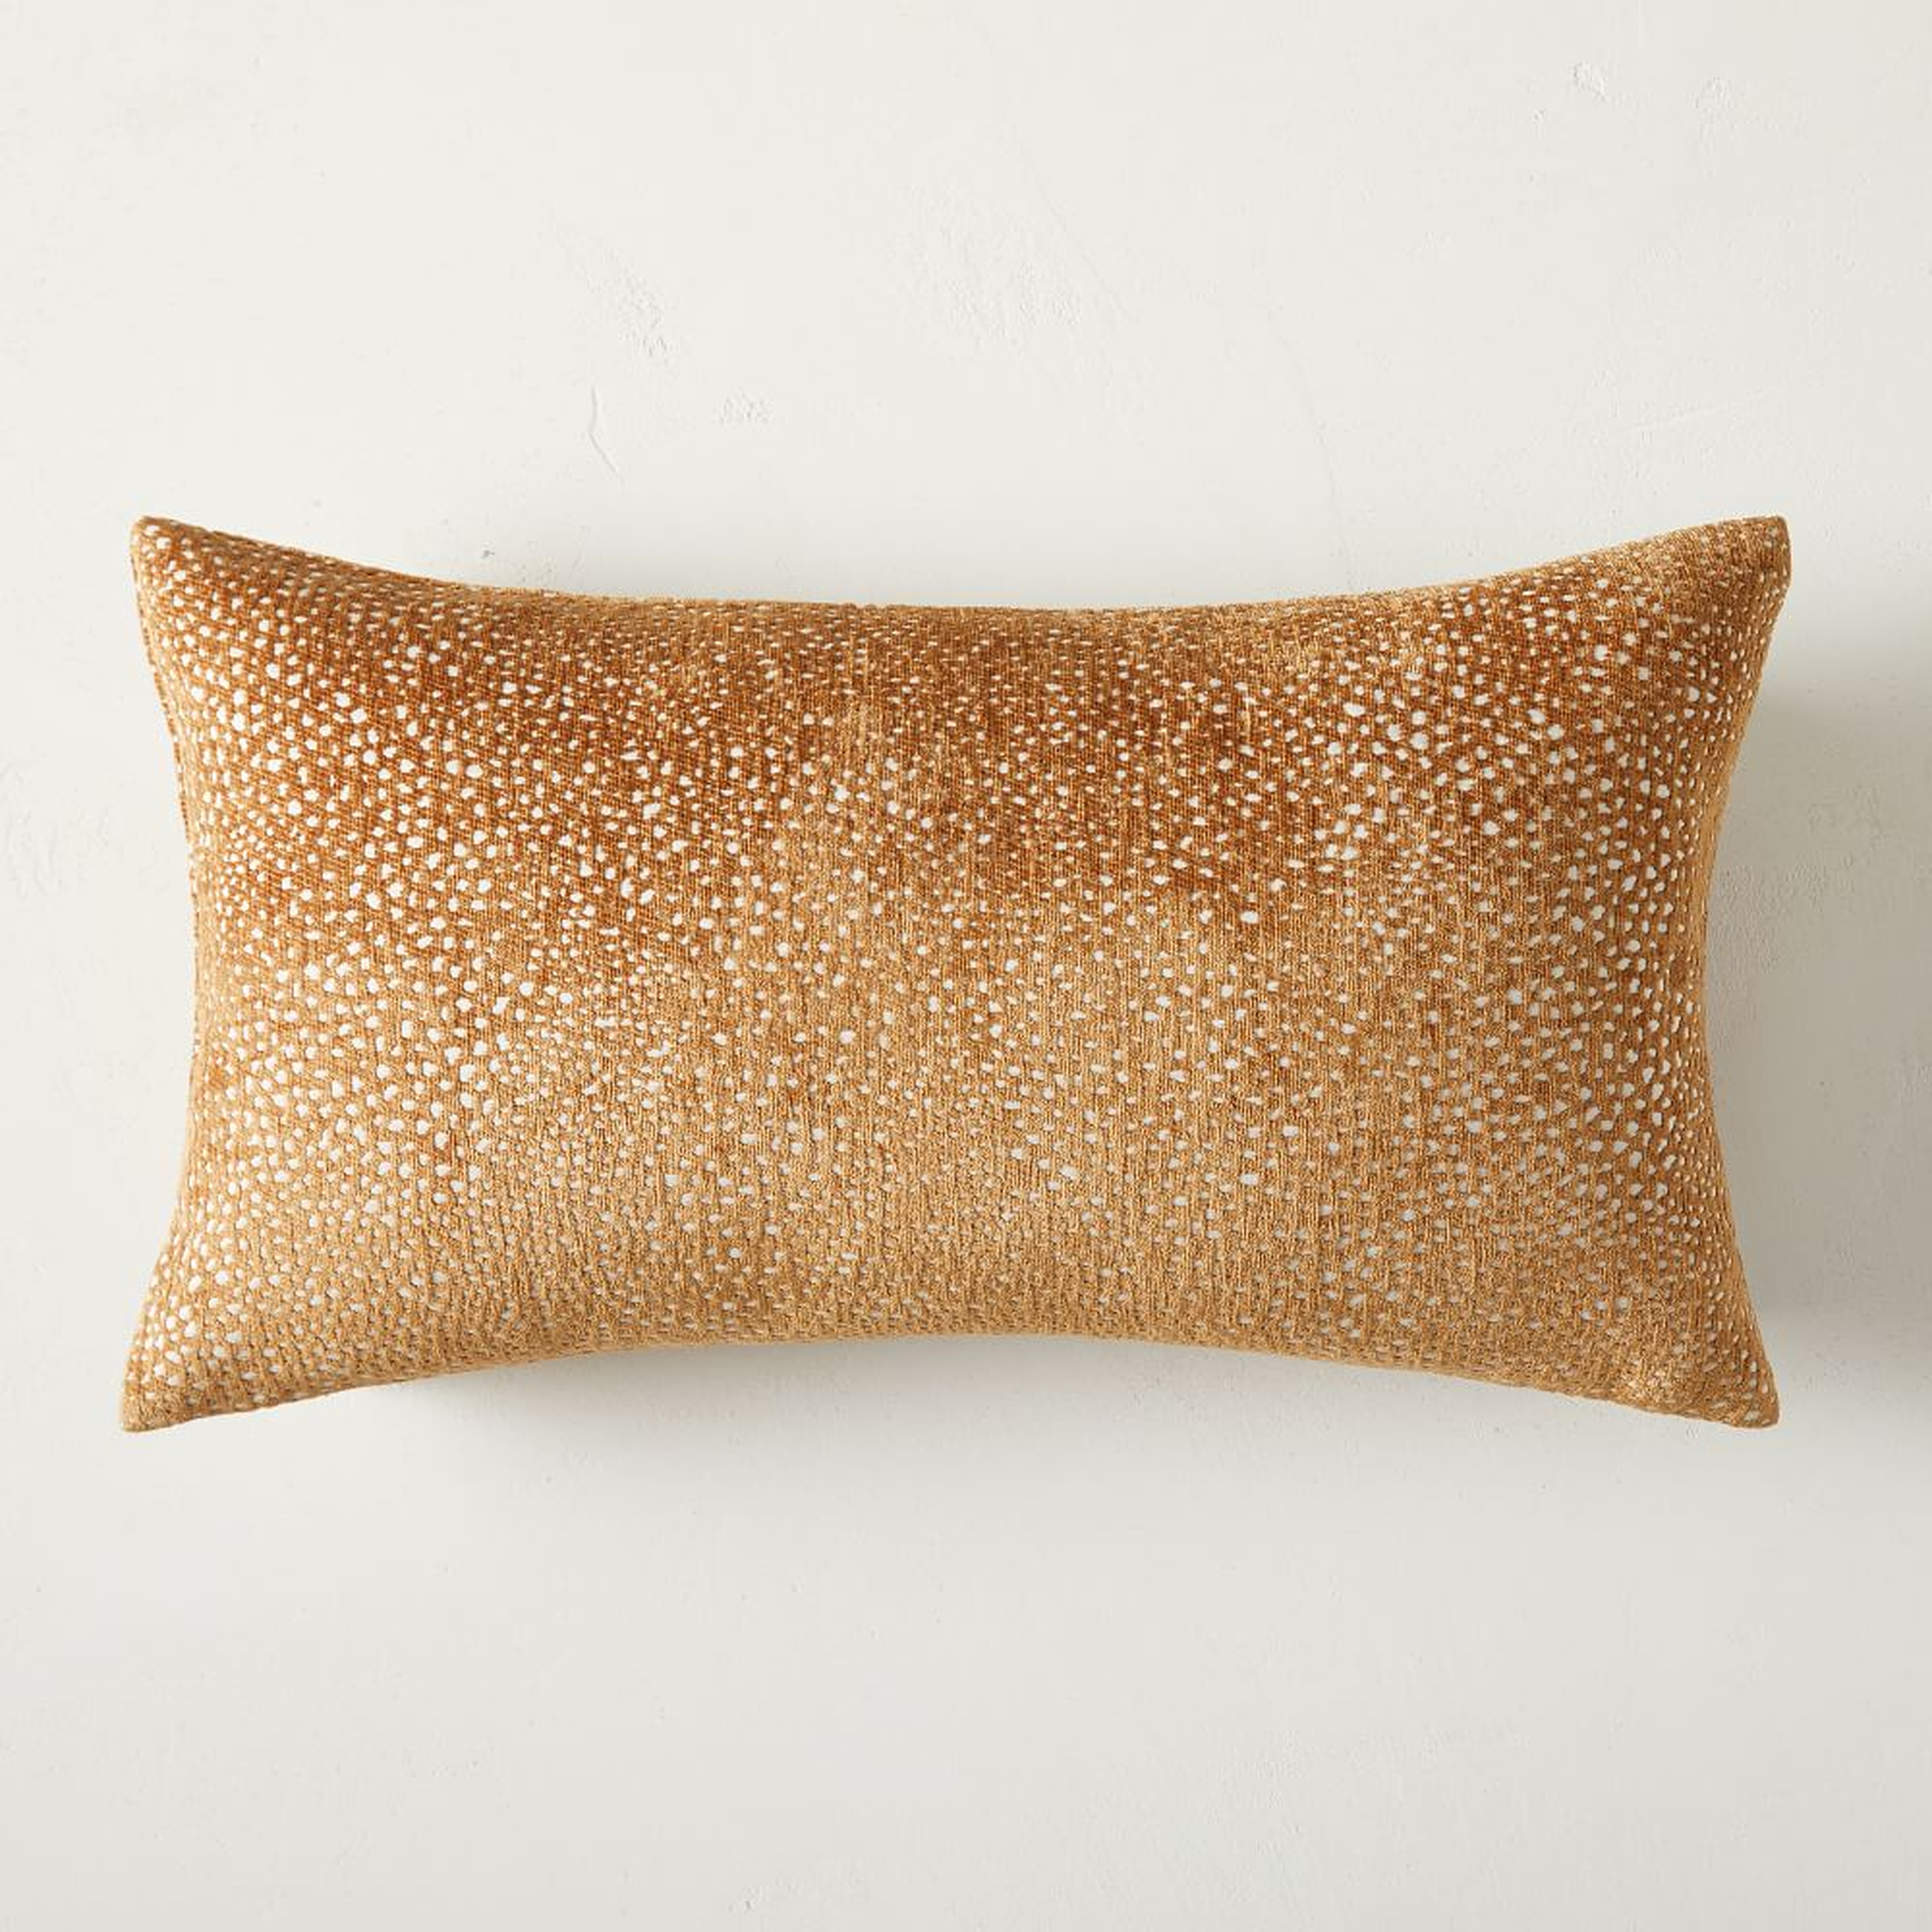 Dotted Chenille Jacquard Pillow Cover, 12"x21", Golden Oak, Set of 2 - West Elm